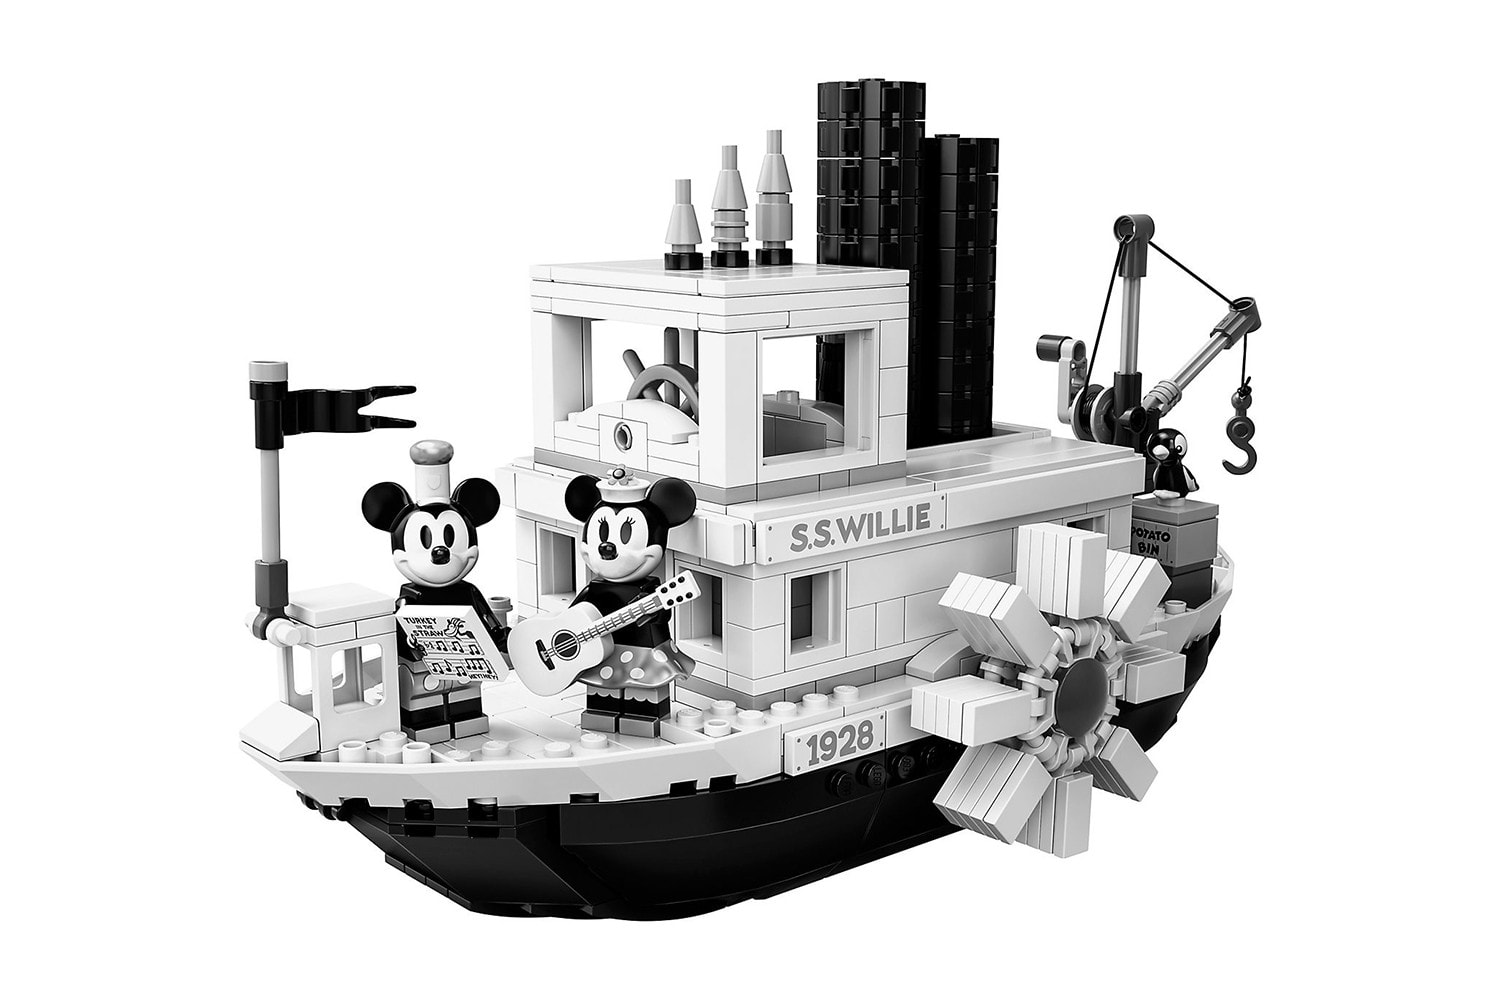 LEGO Ideas 實裝 Disney 首部有聲動畫《Steamboat Willie》